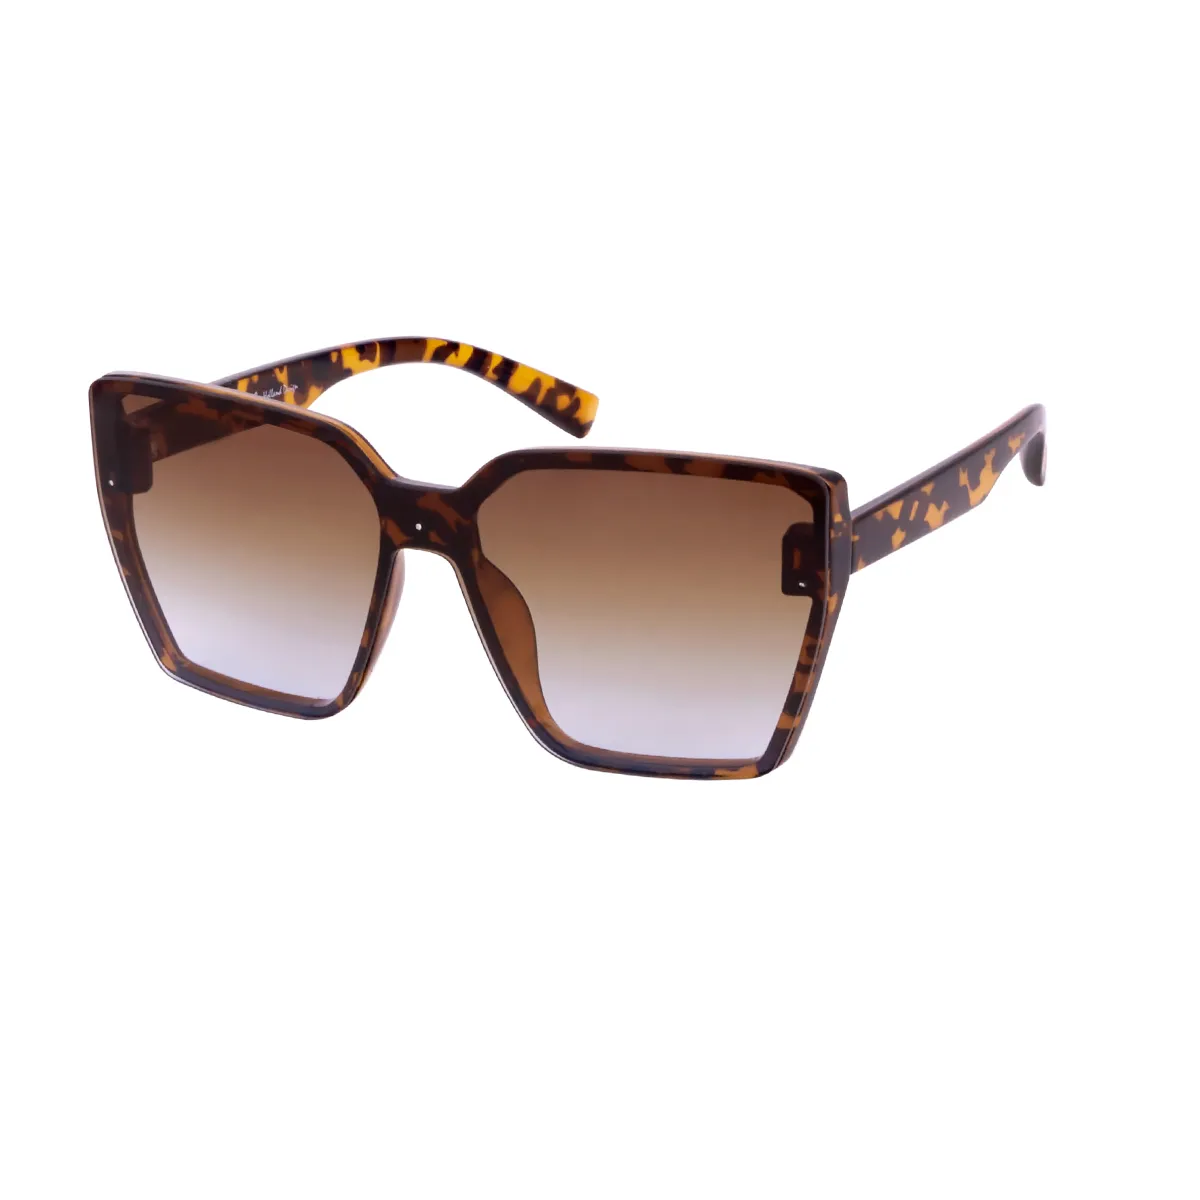 Cara - Square Tortoiseshell Sunglasses for Women